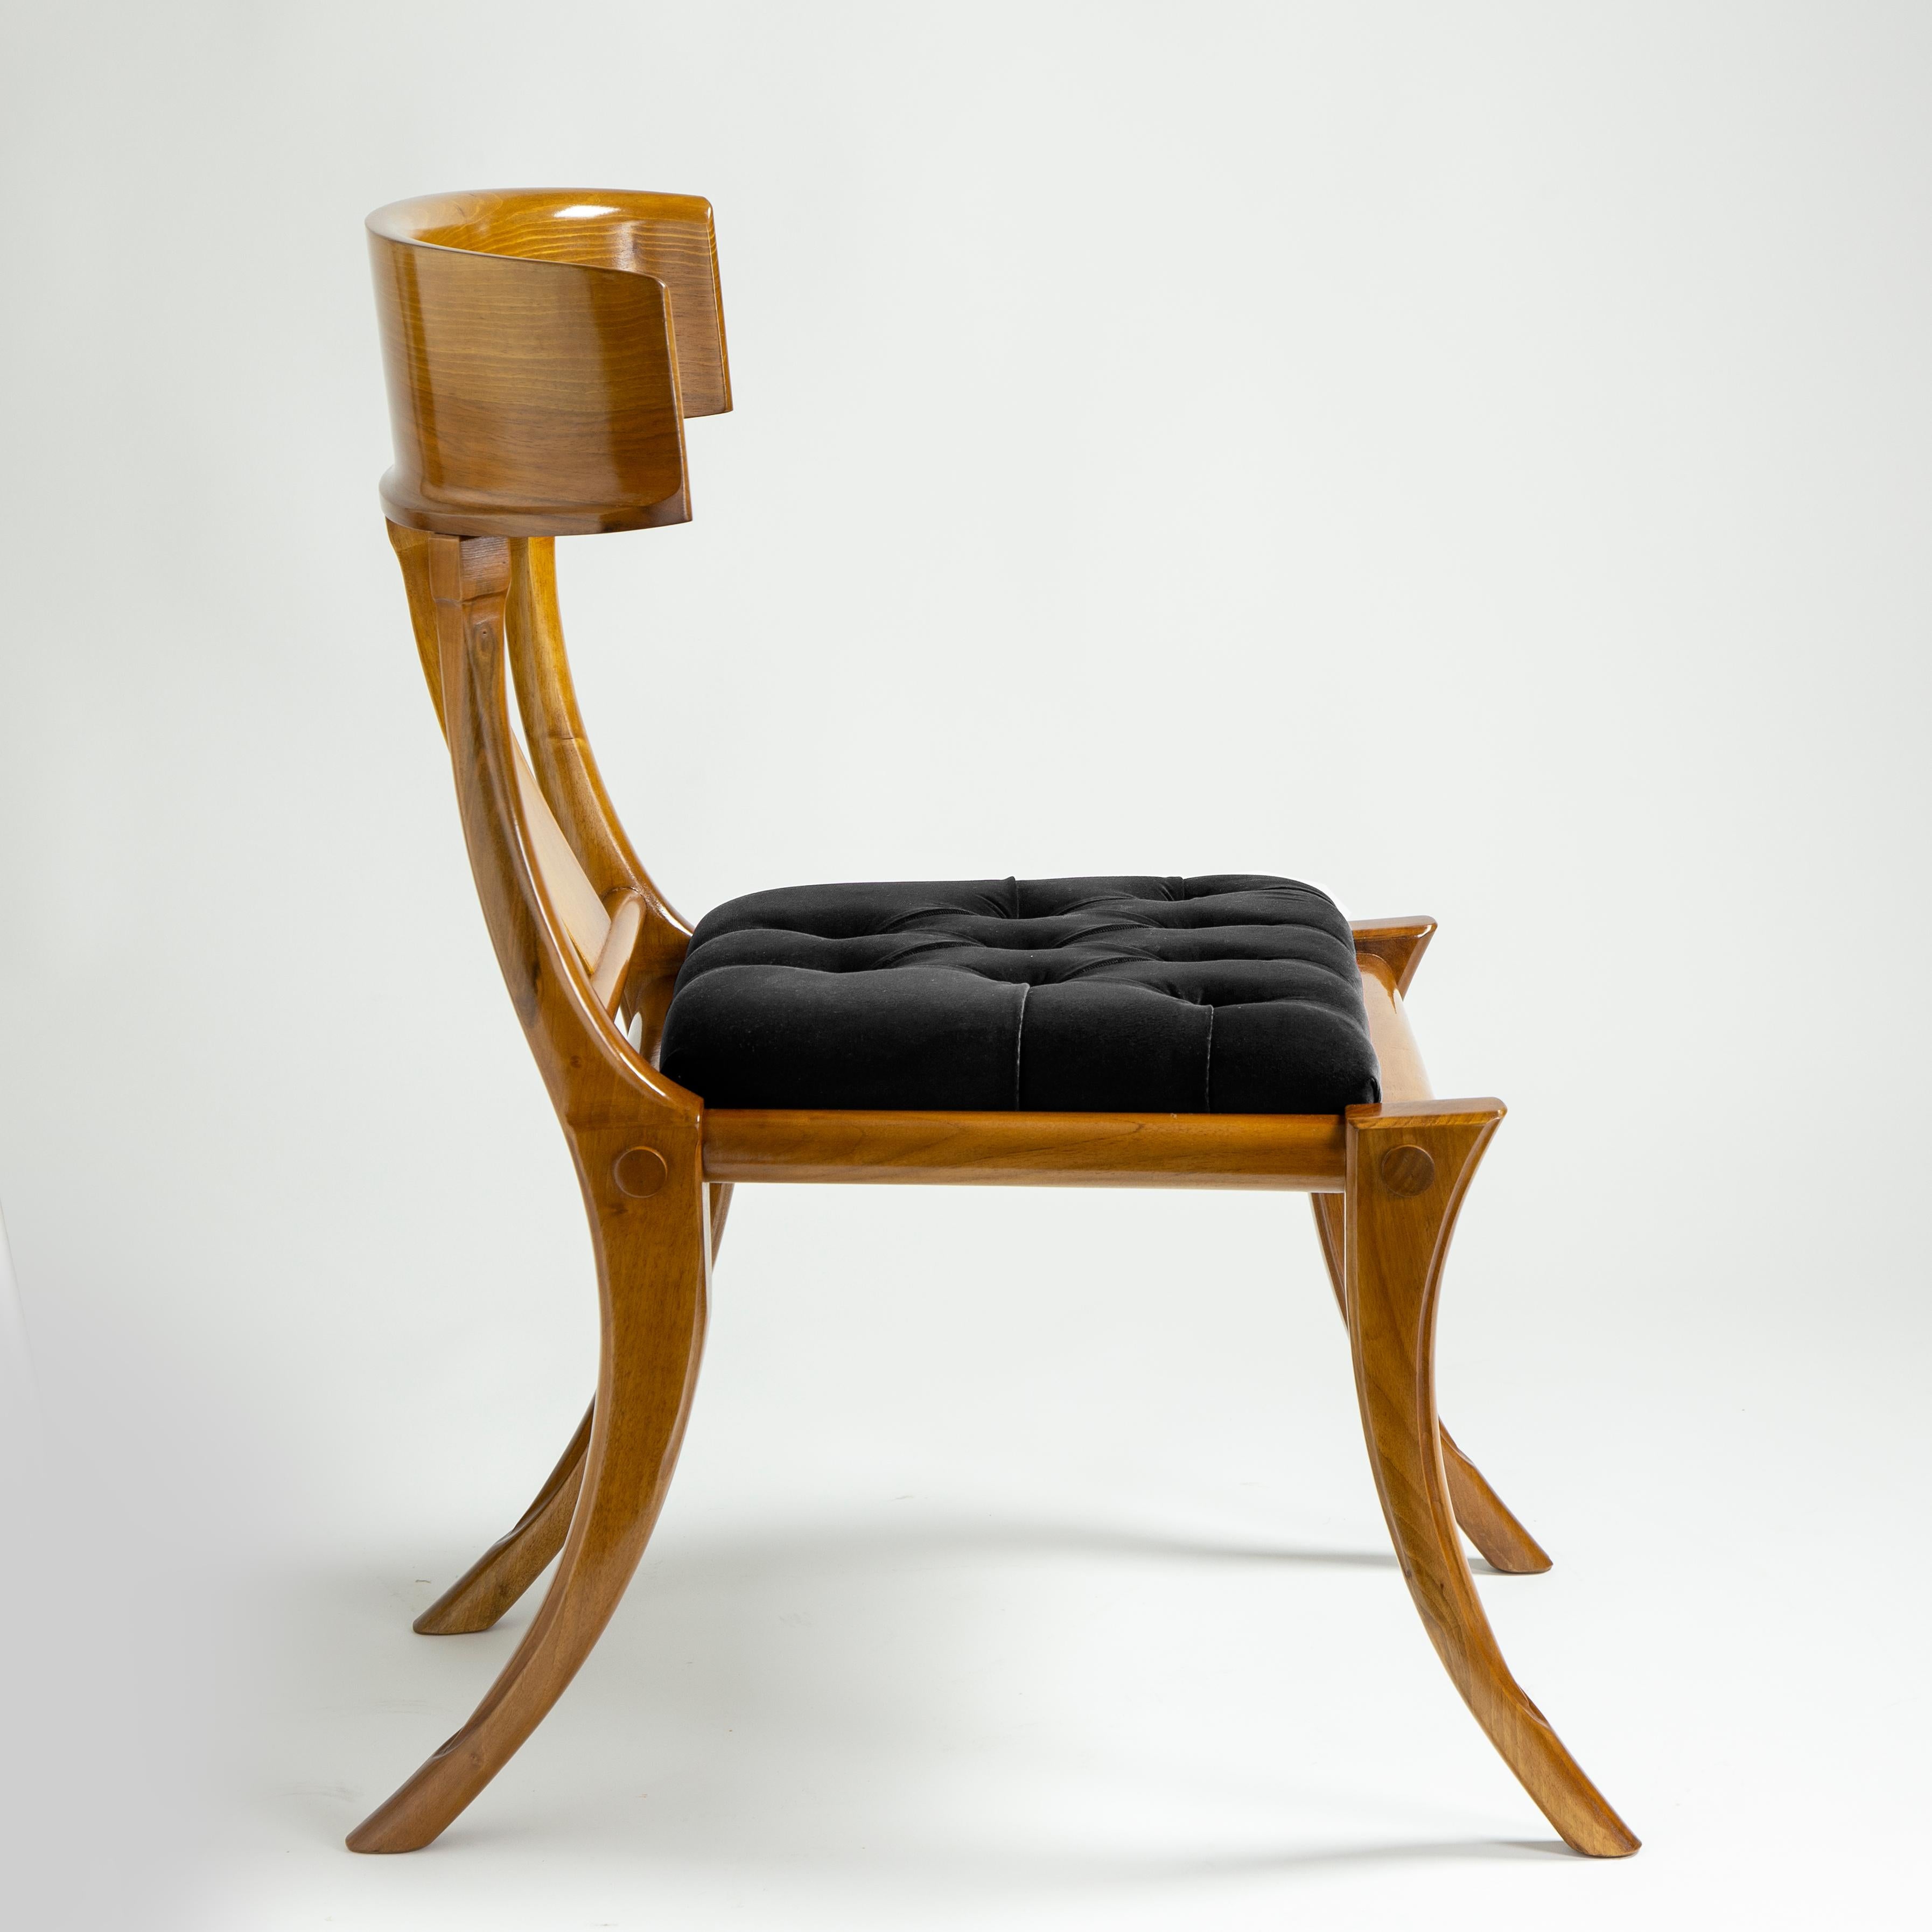 Klismos Walnut Wood Leather Seats Saber Legs Dining Chairs, Customizable 1